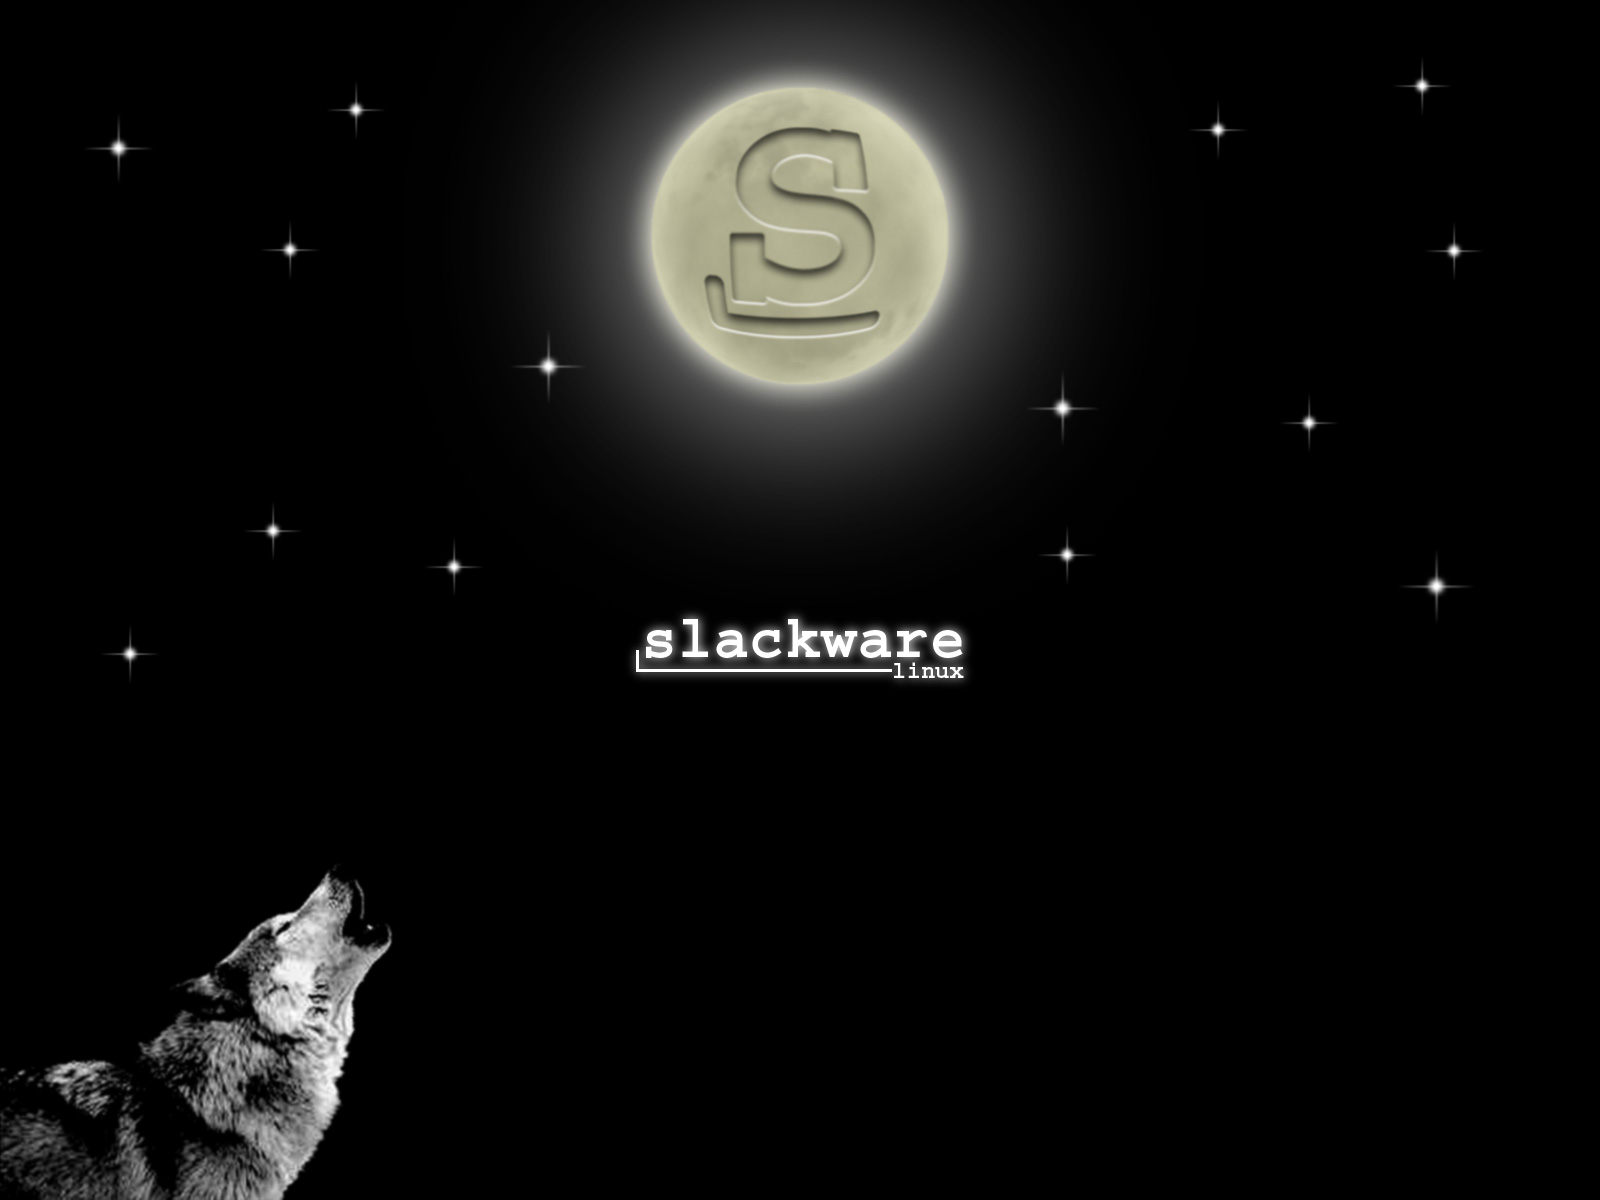 Slackware Wallpaper HD Girls